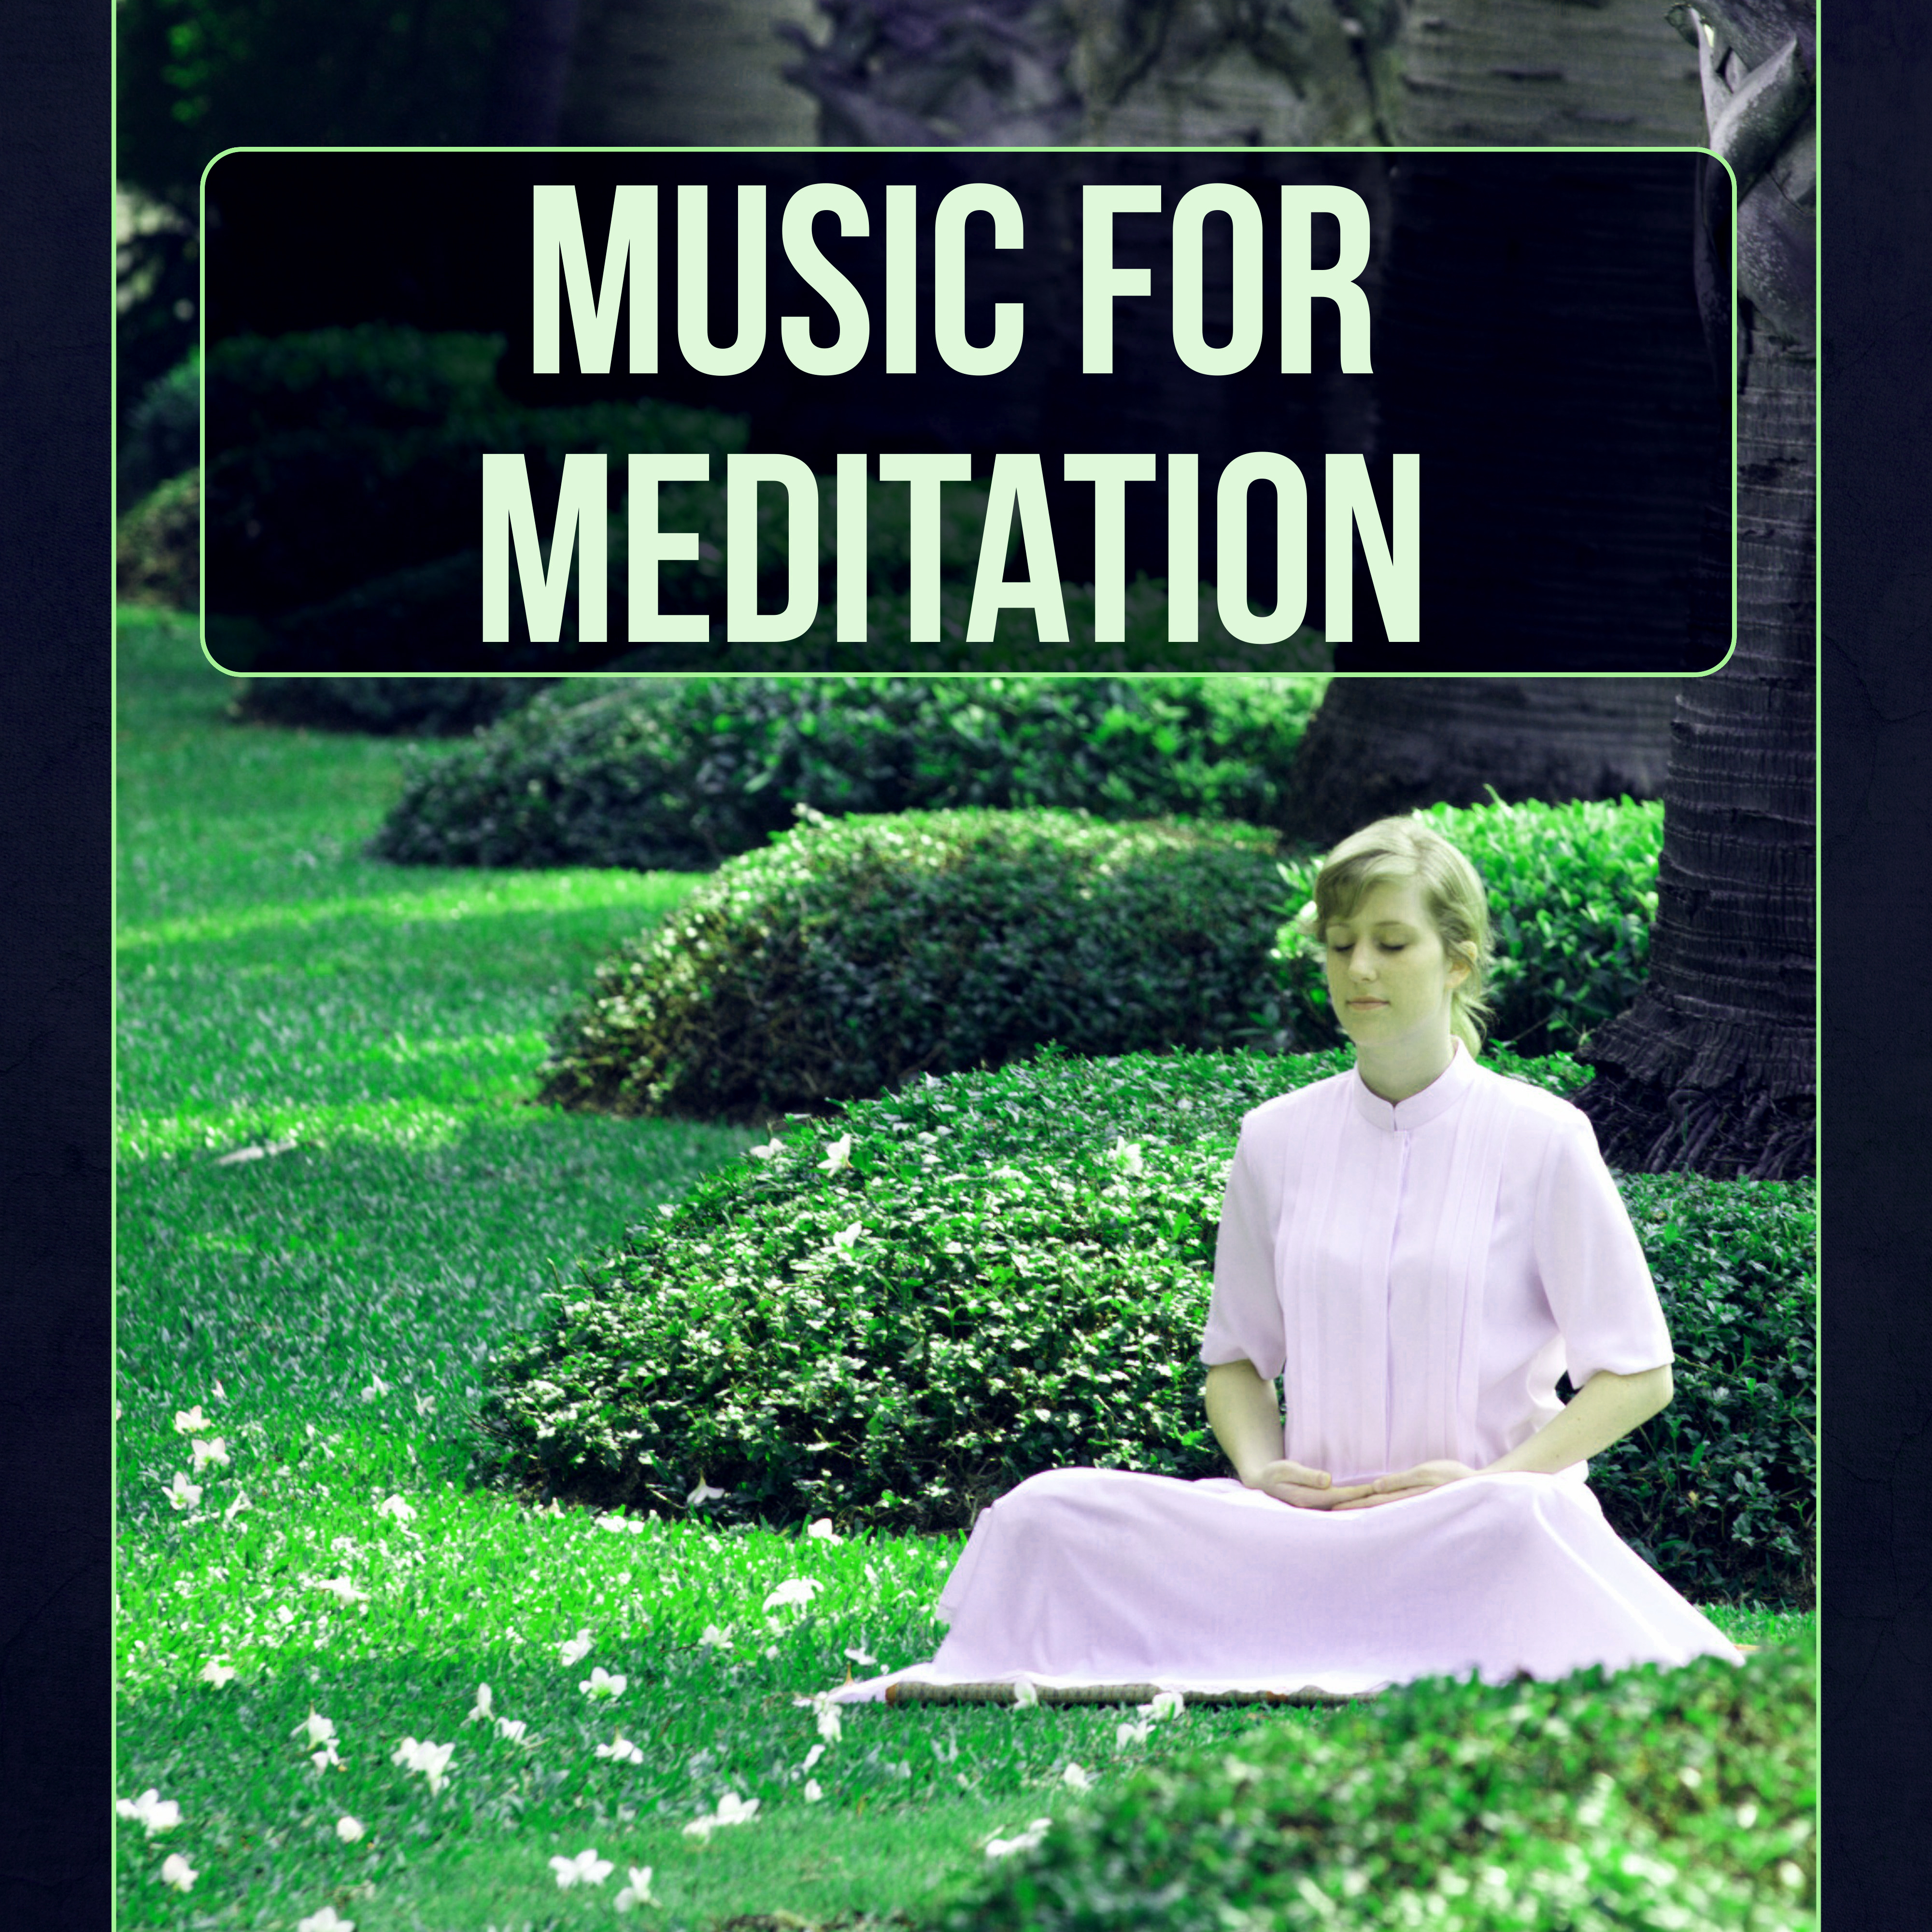 Music for Meditation - New Age, Mindfulness Meditation, Easy Listening, Spiritual Music, Relaxation, Peaceful Music, Healing Meditation